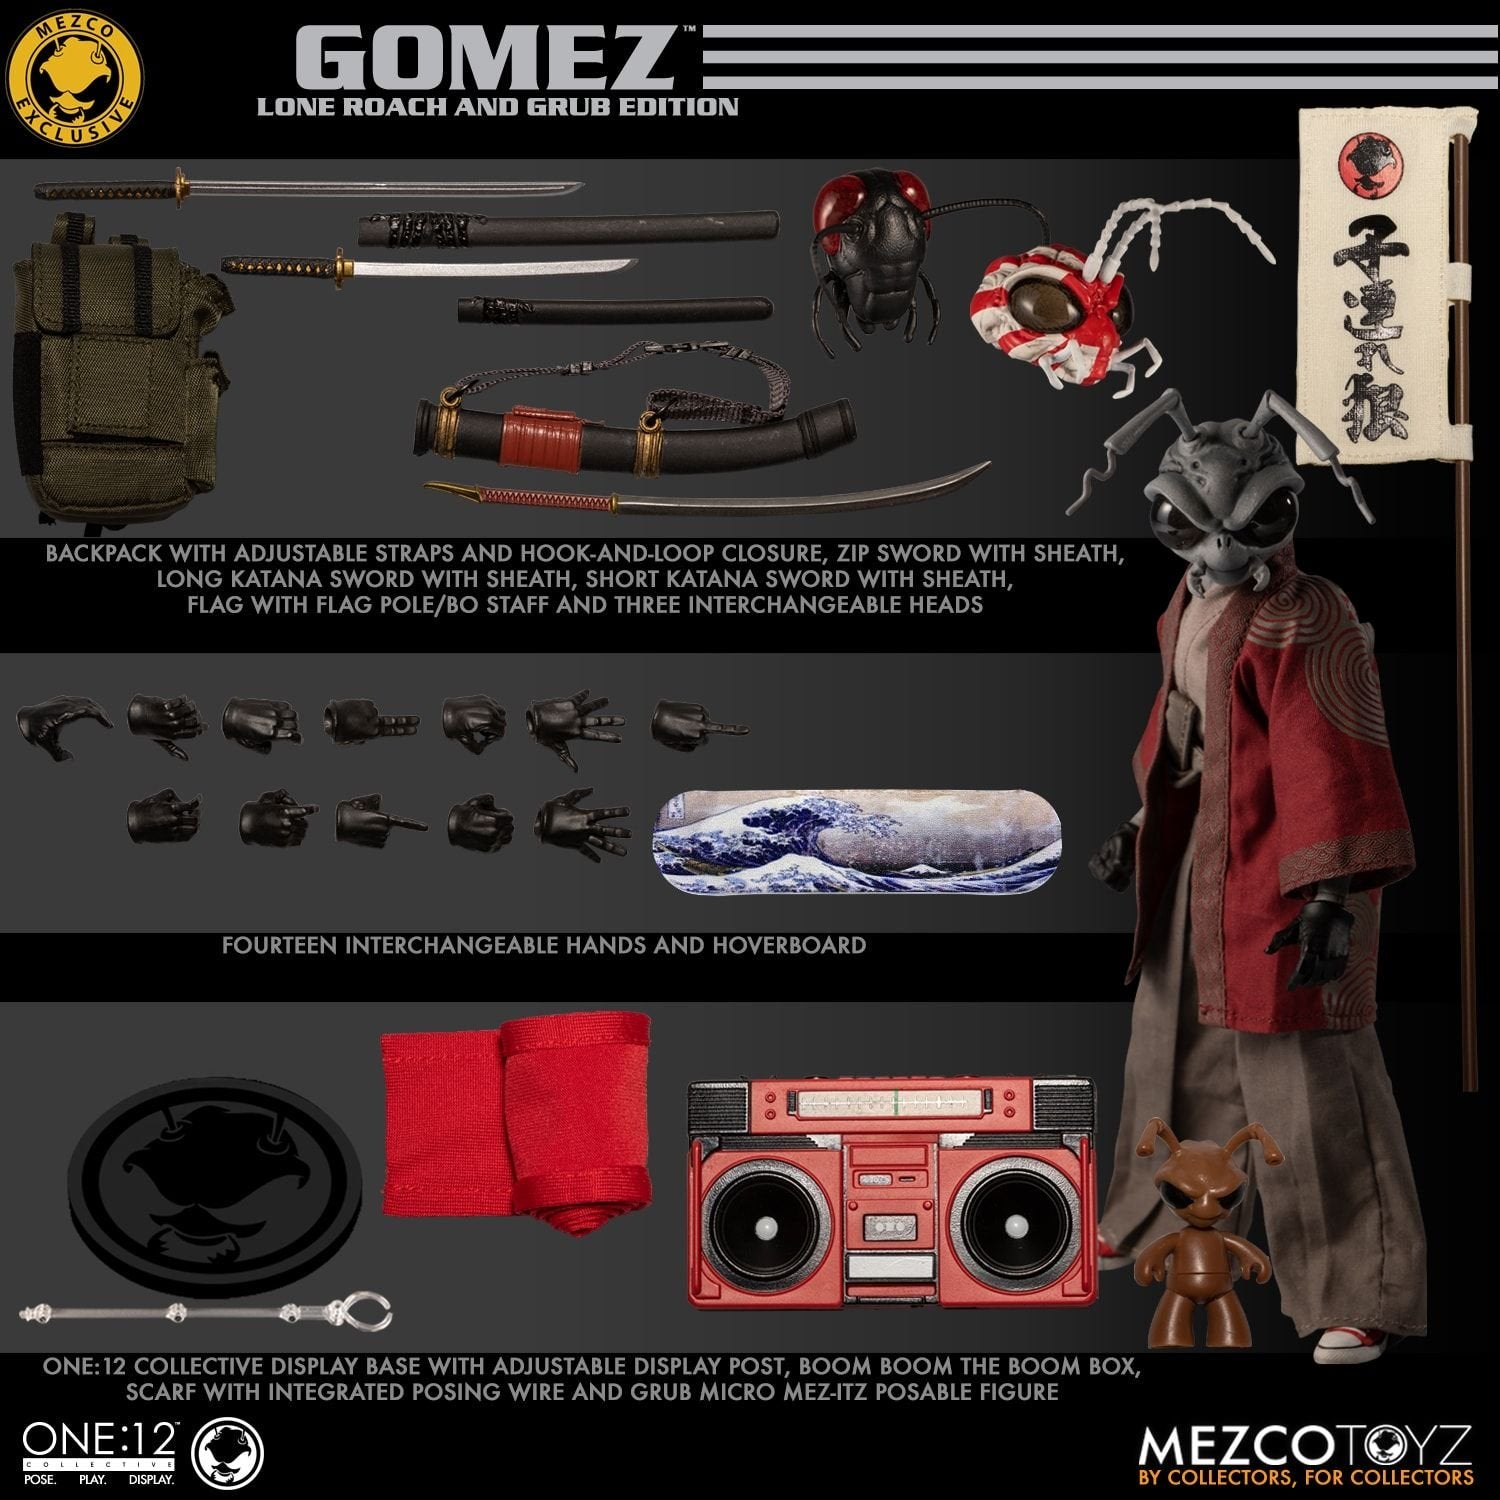 Mezco Toyz ONE:12 Collective: Gomez Lone Roach & Grub Fall Exclusive Action Figure